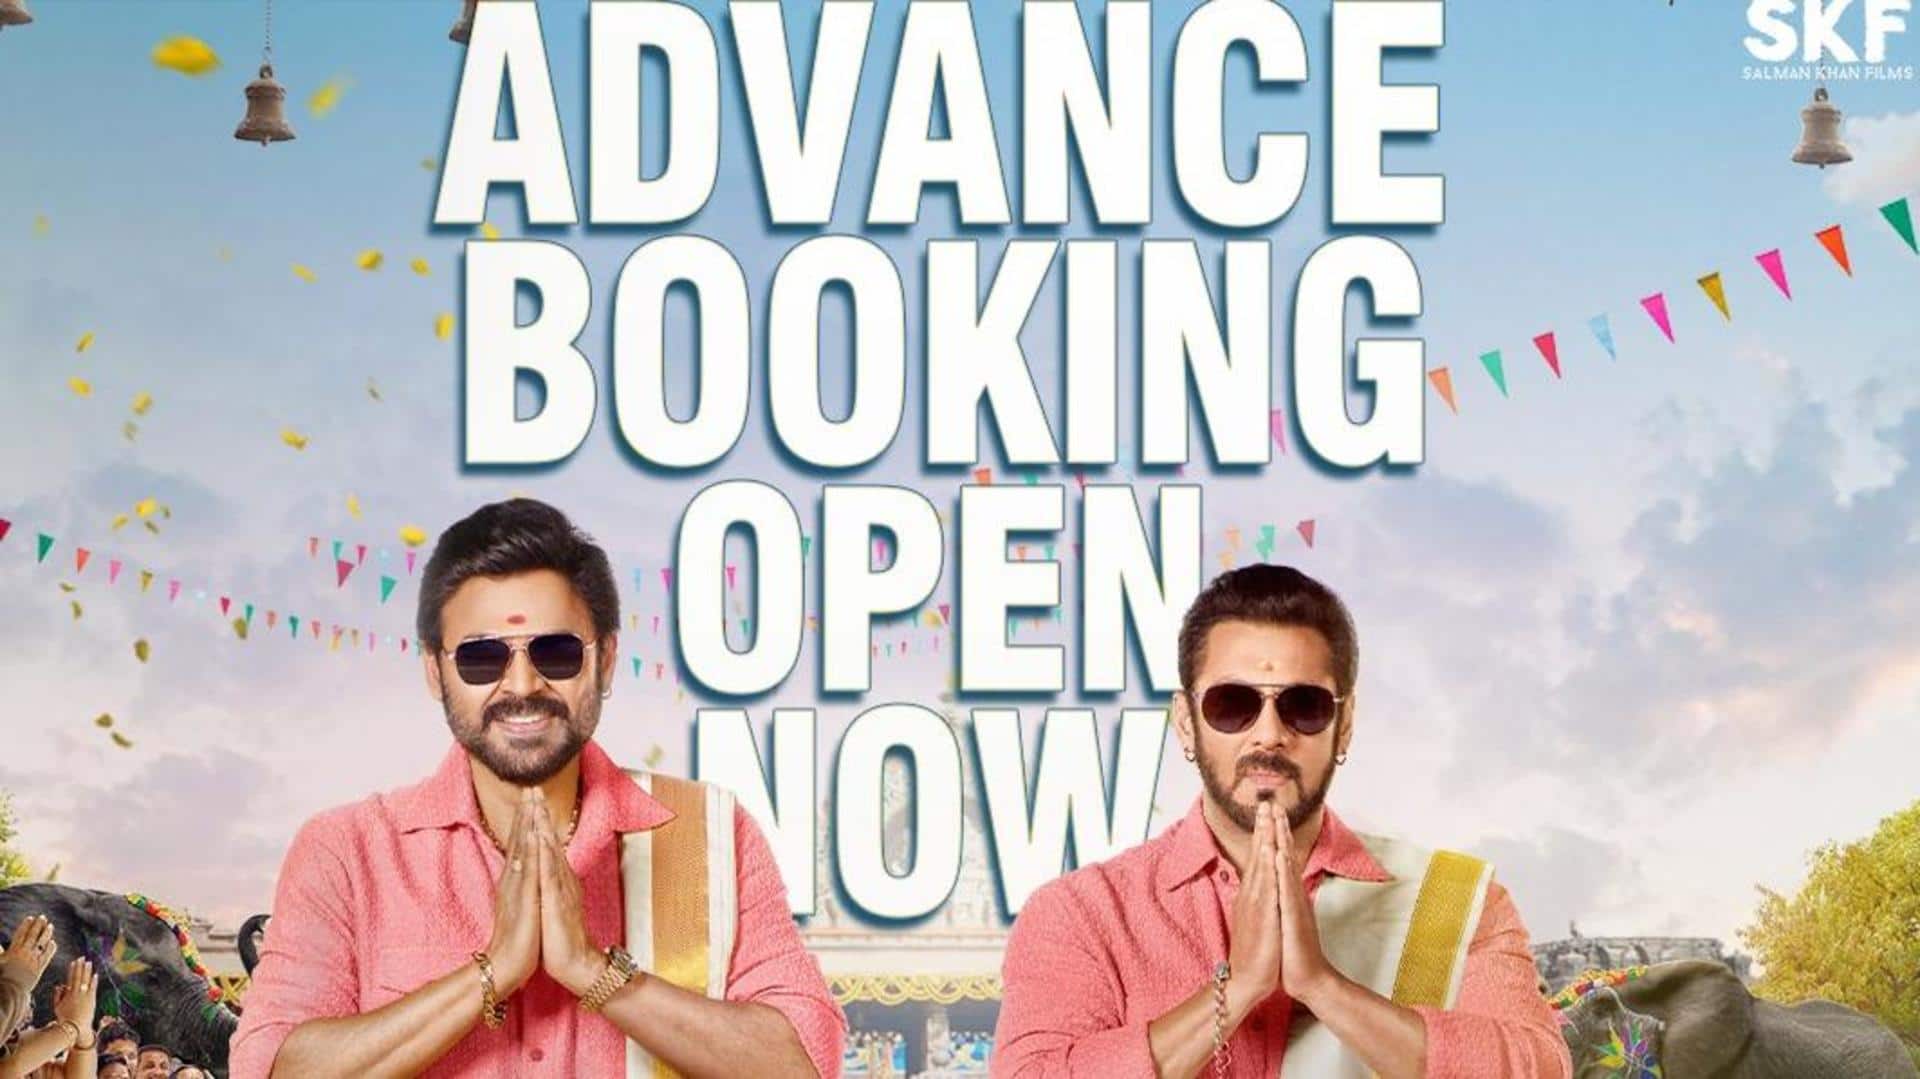 Salman Khan's 'KKBKKJ' advance booking is open now